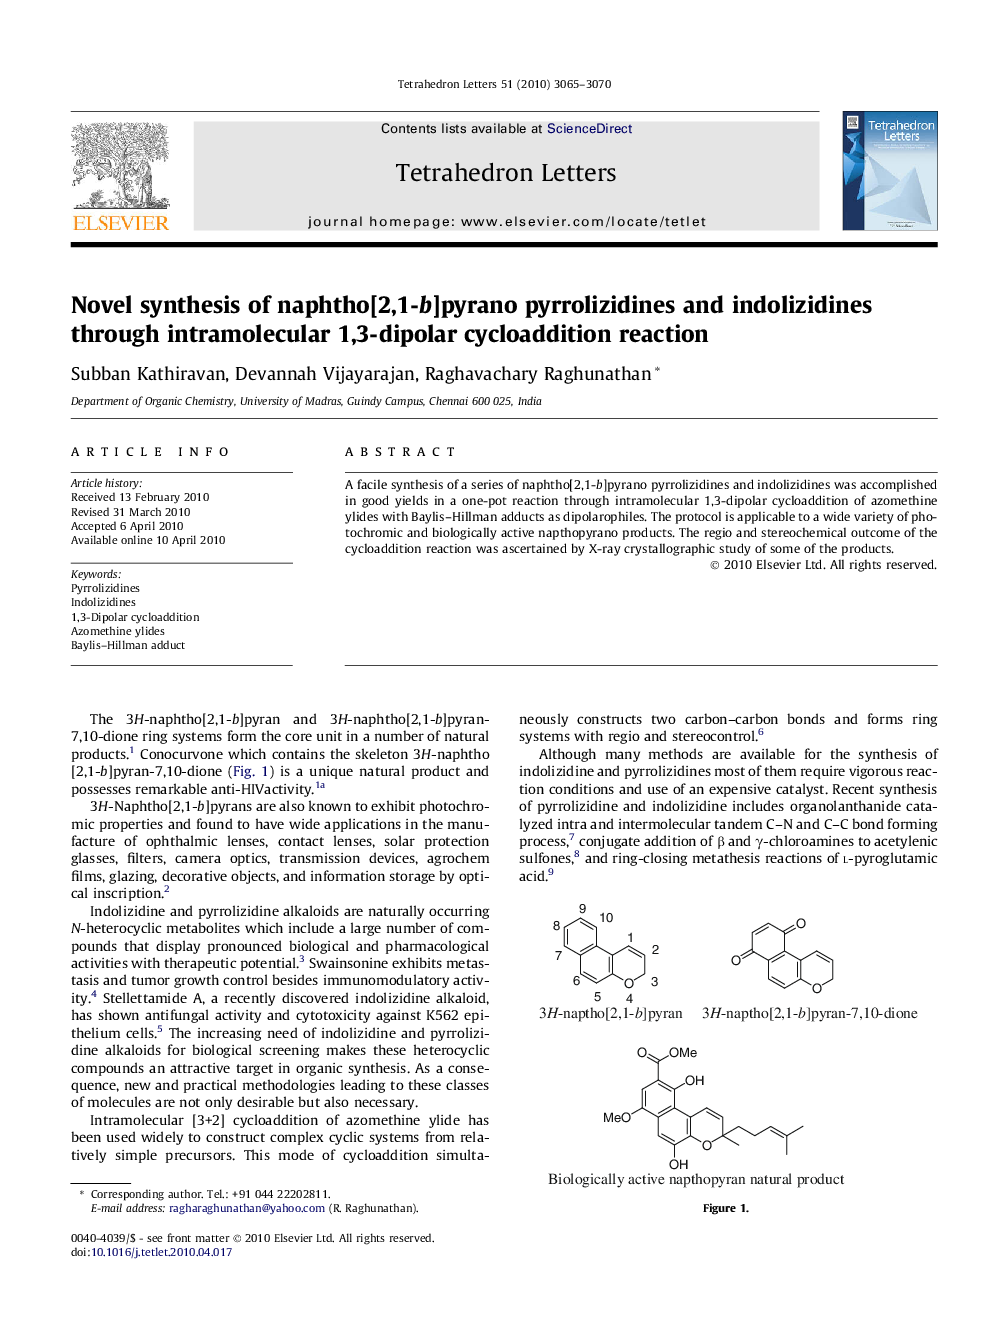 Novel synthesis of naphtho[2,1-b]pyrano pyrrolizidines and indolizidines through intramolecular 1,3-dipolar cycloaddition reaction